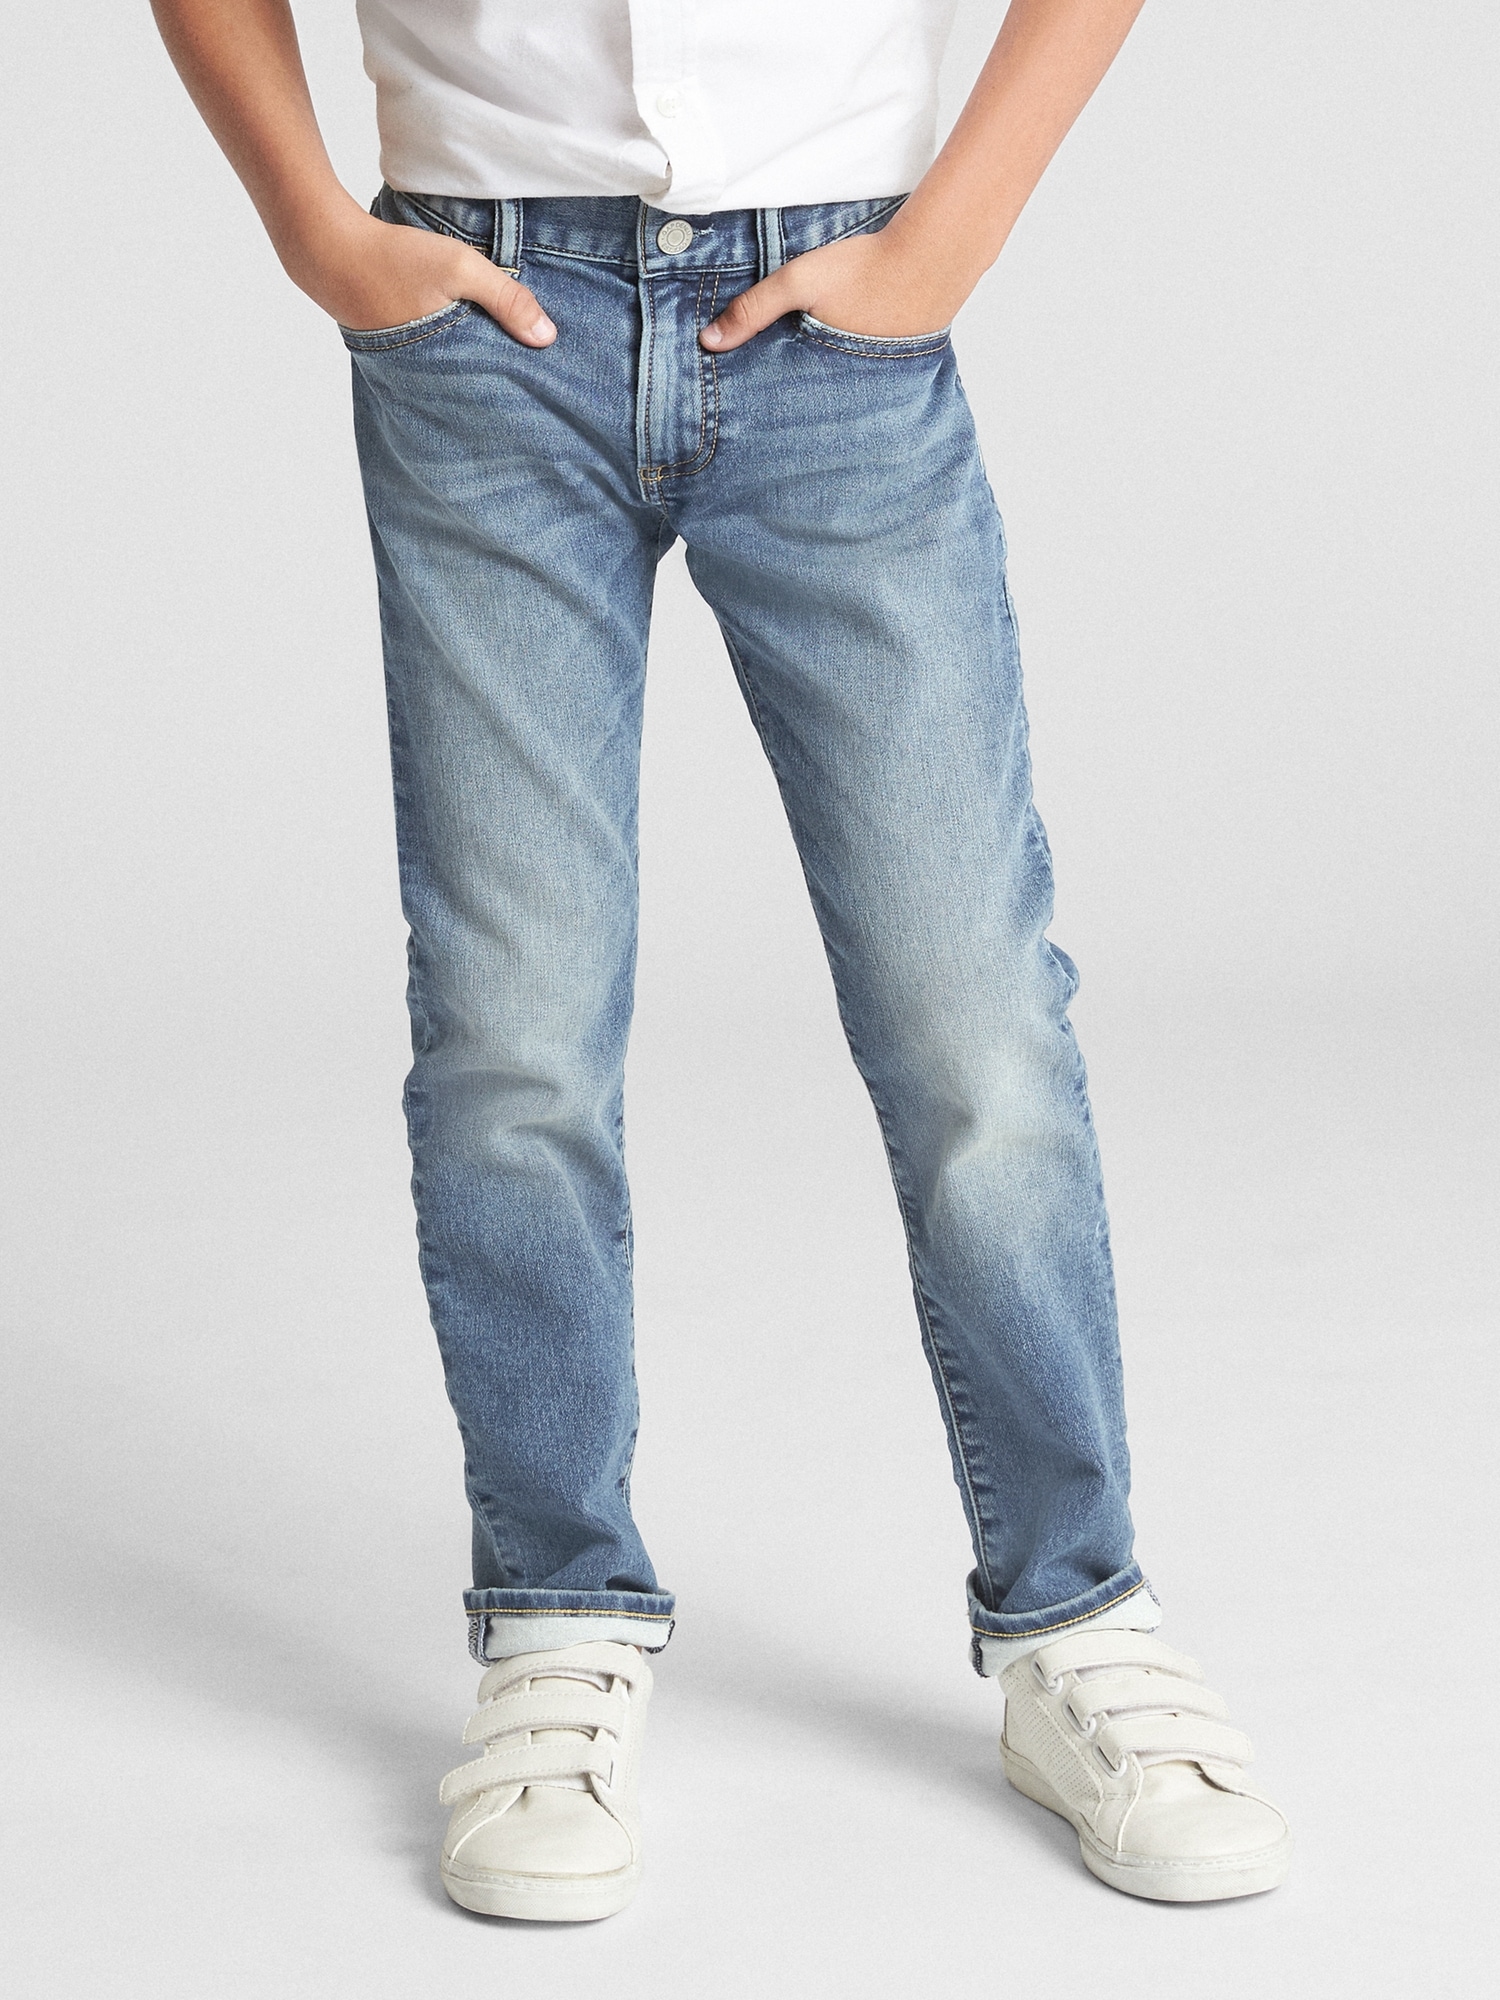 the slim jeans